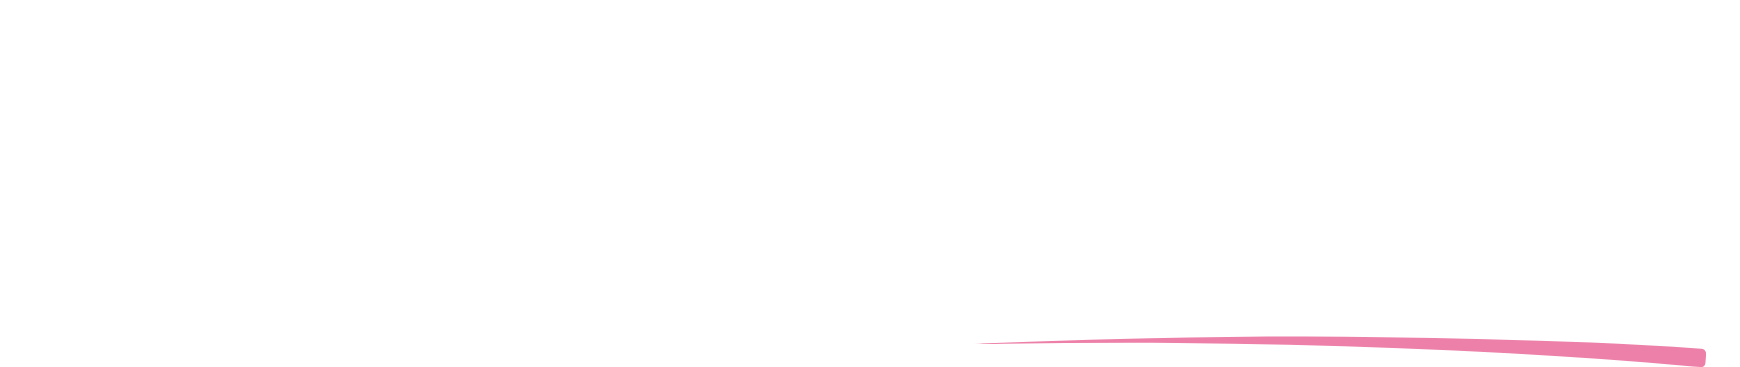 AutoNation Logo groß für dunkle Hintergründe (transparentes PNG)